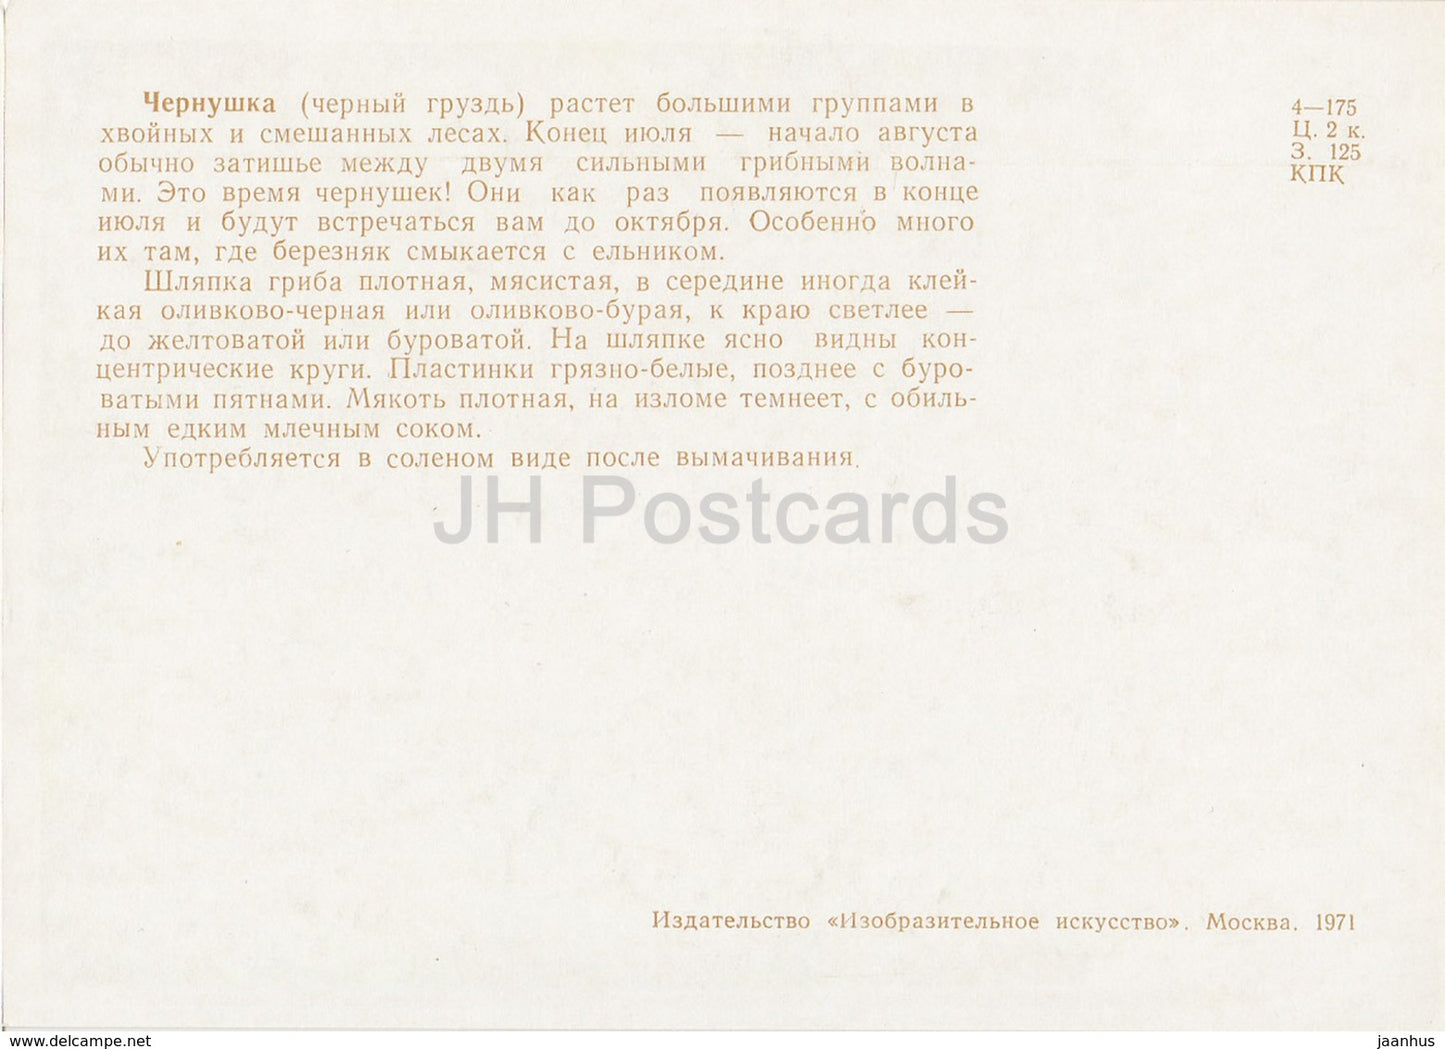 Hässliche Milchkappe - Lactarius turpis - Pilze - Illustration - 1971 - Russland UdSSR - unbenutzt